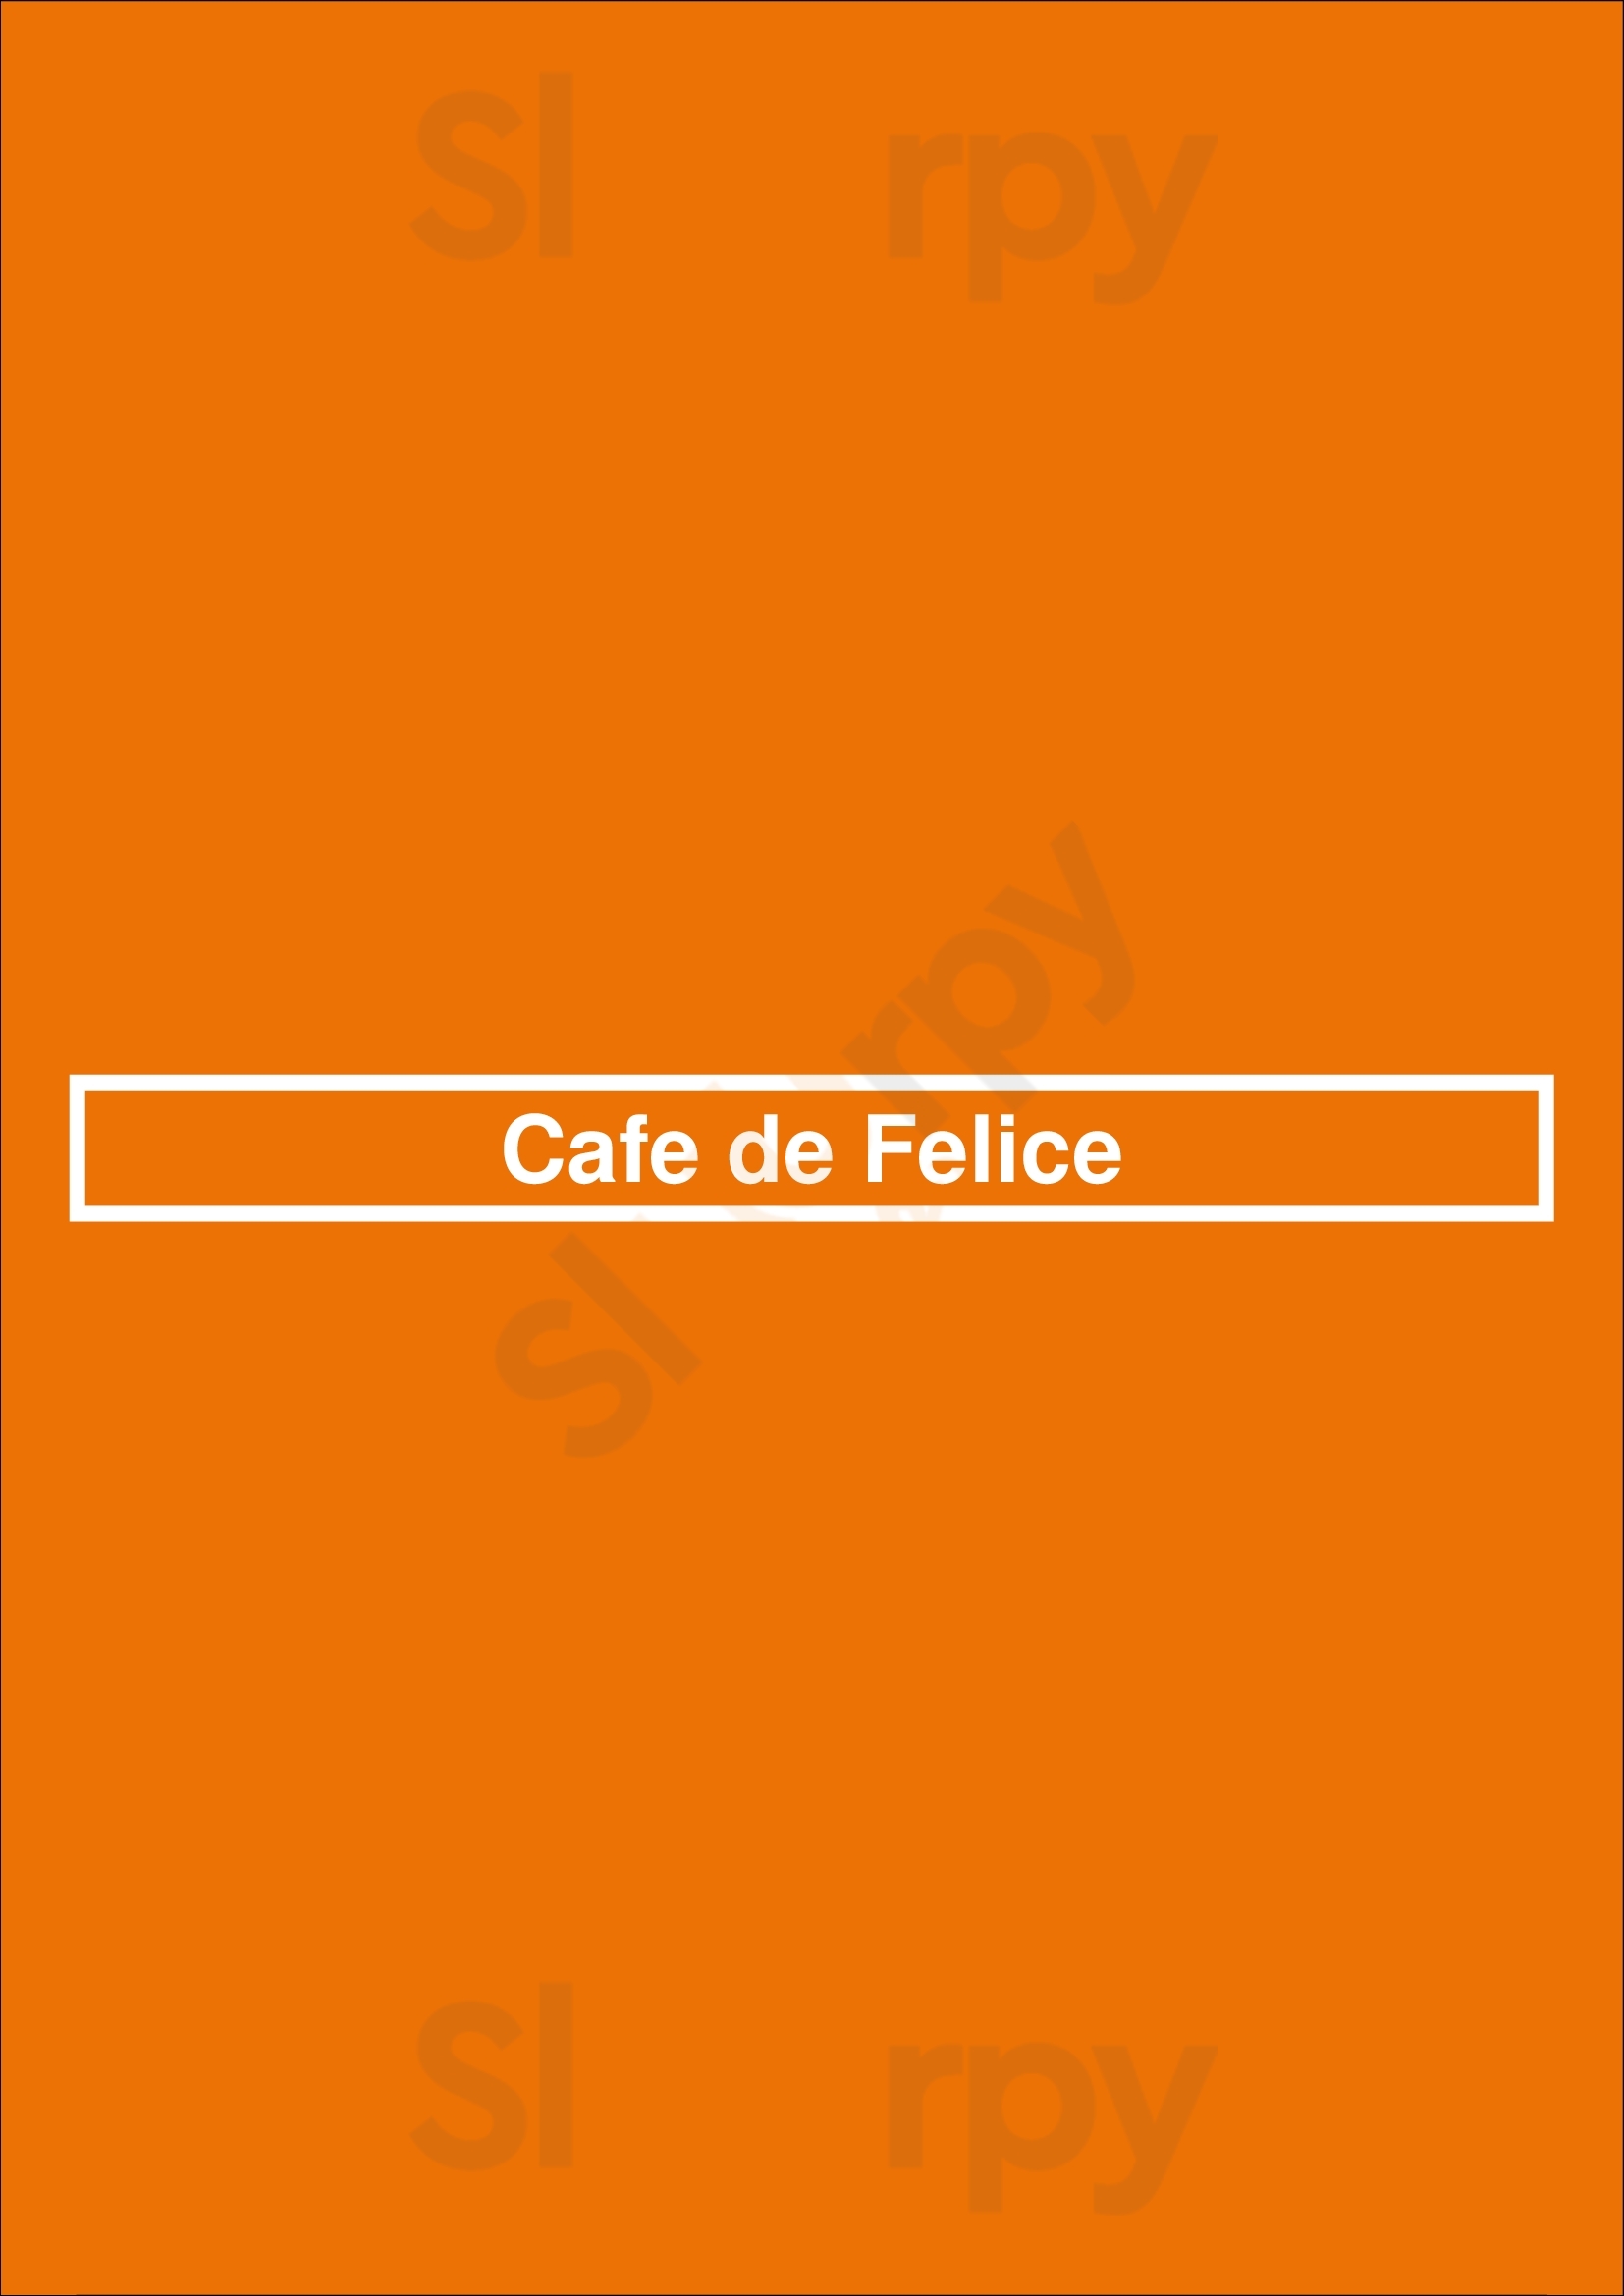 Cafe De Felice Paris Menu - 1